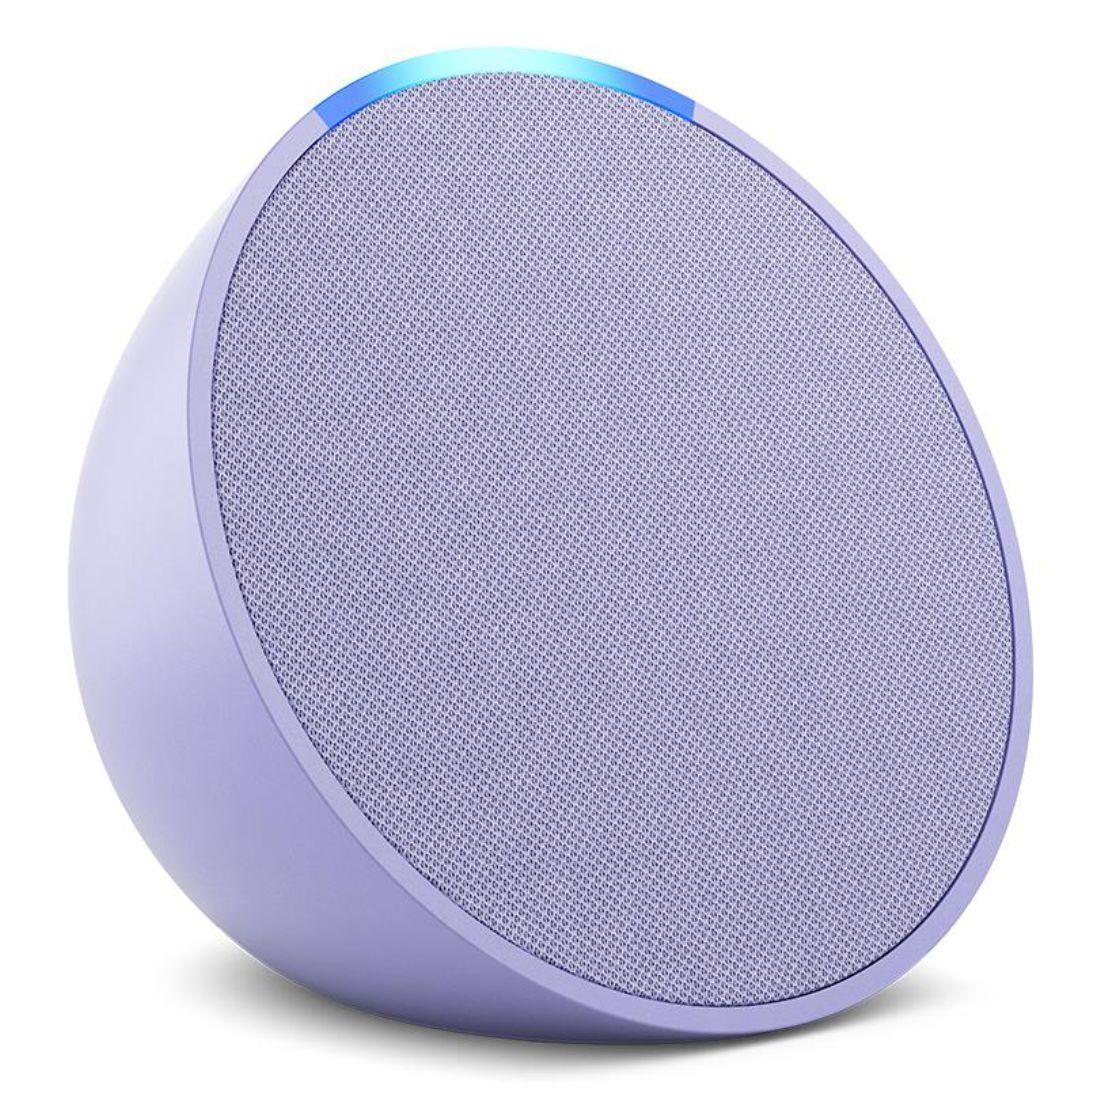 Amazon Echo Pop Compact Smart Speaker - Lavender Bloom